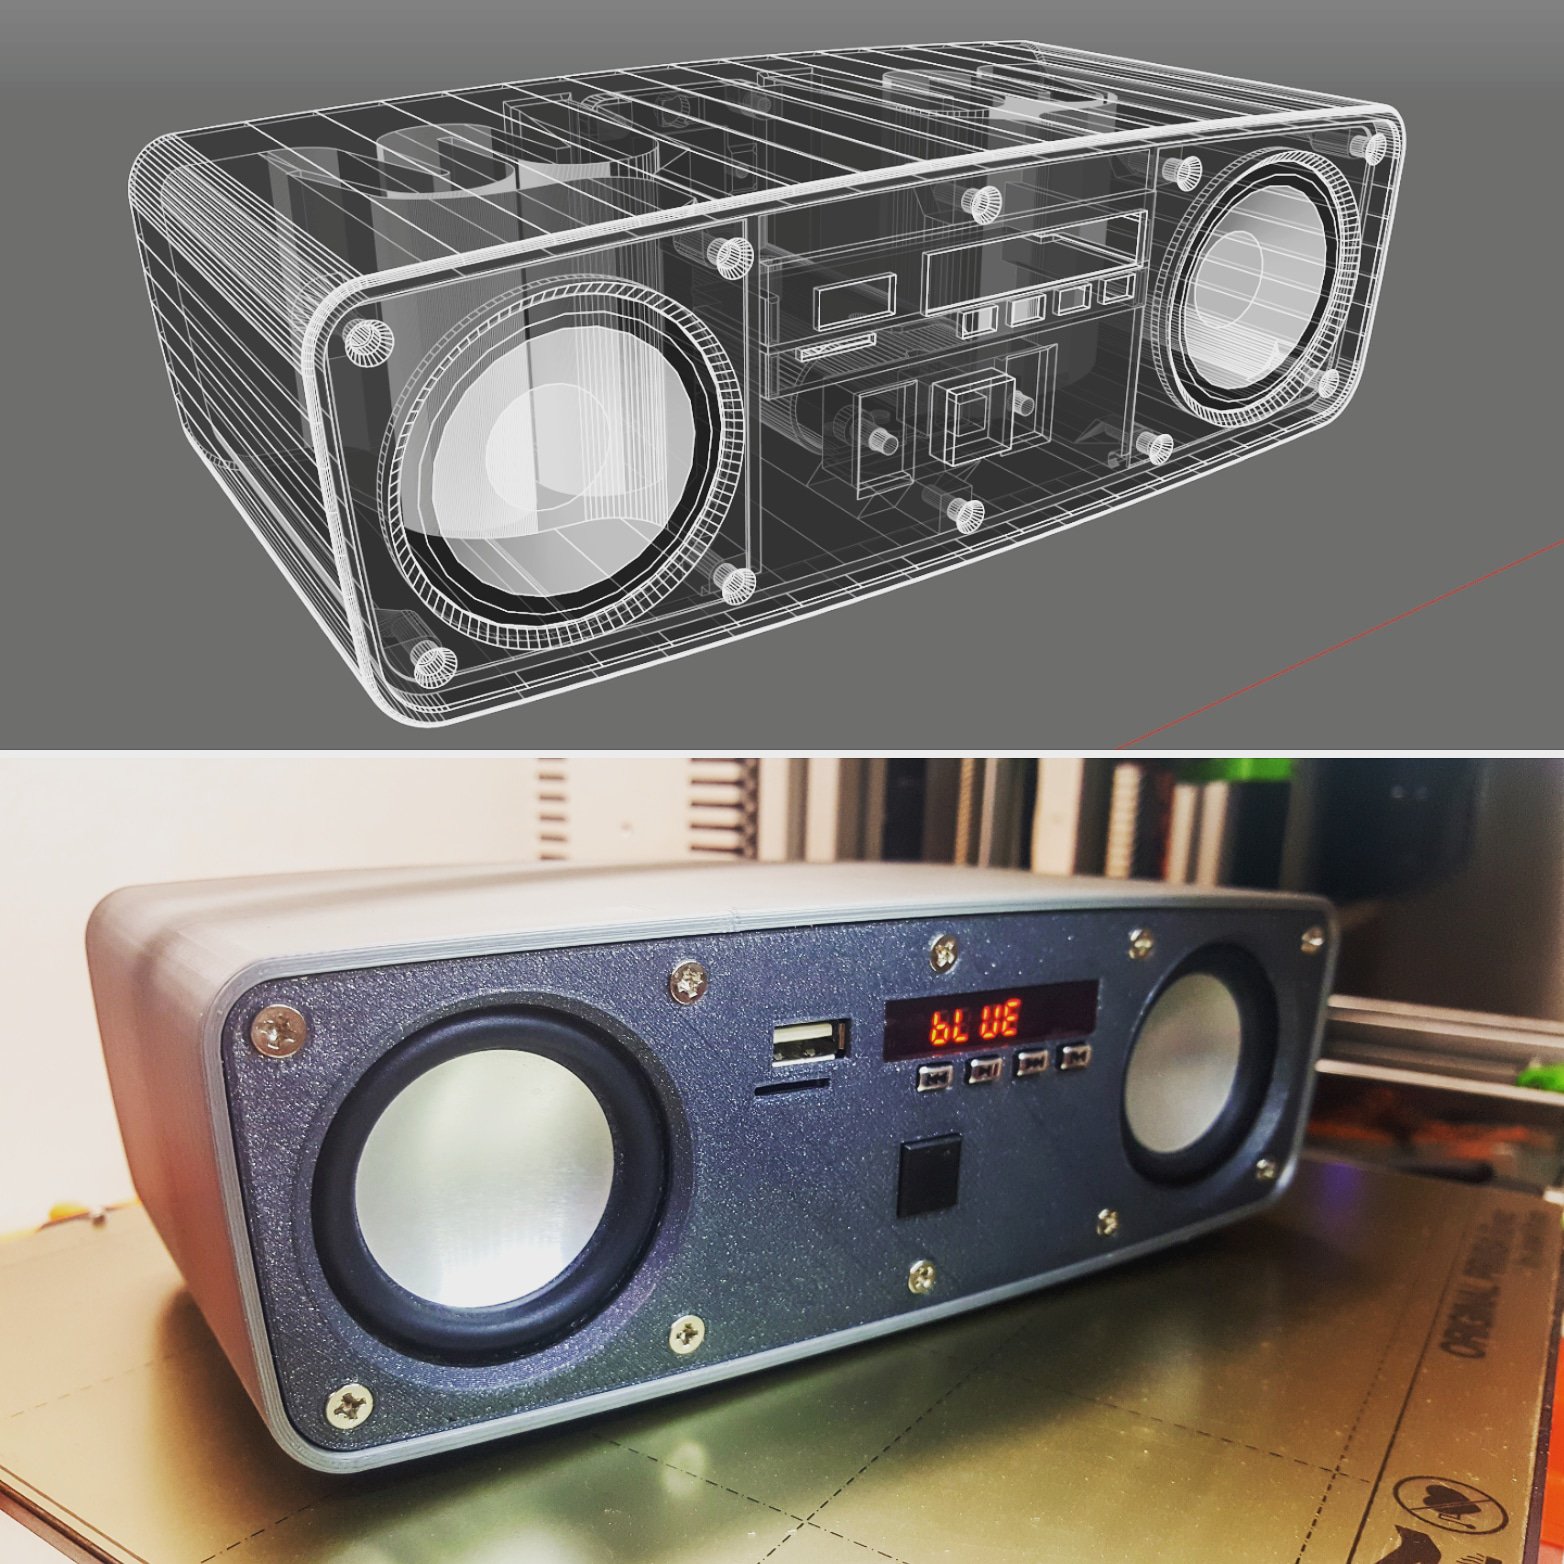 Barti Janos on Twitter: "3D printed portable bluetooth speaker #3dprinted #diy #prusai3mk3 #bluetoothspeaker https://t.co/oyU26nAOKO" / Twitter